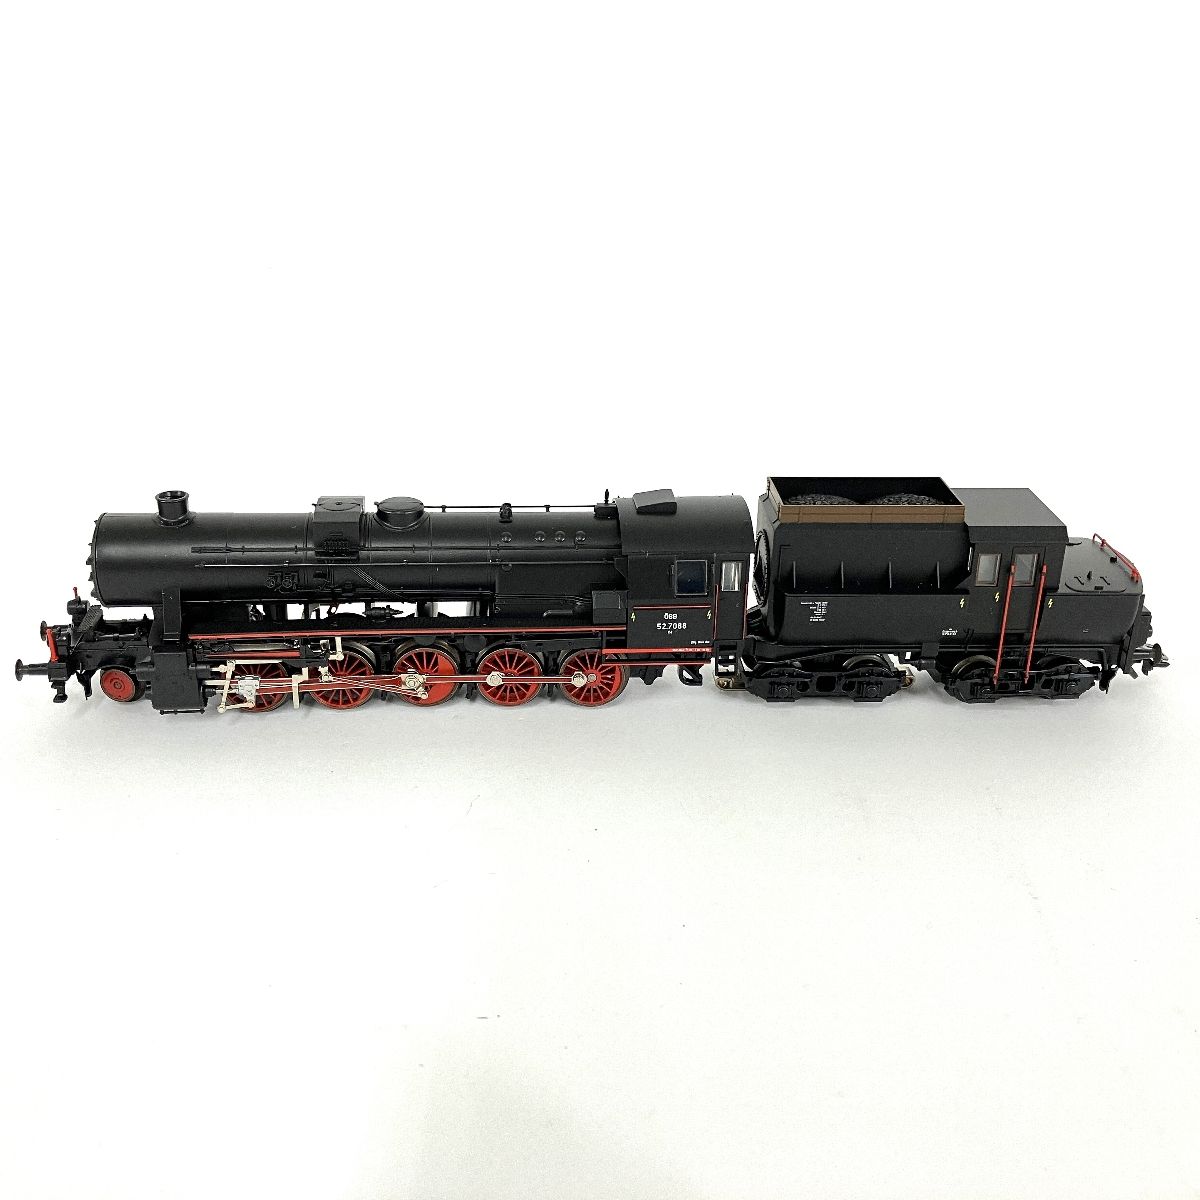 Marklin メルクリン 3416 BR 52 OBB 蒸気機関車 鉄道模型 HO ジャンク 